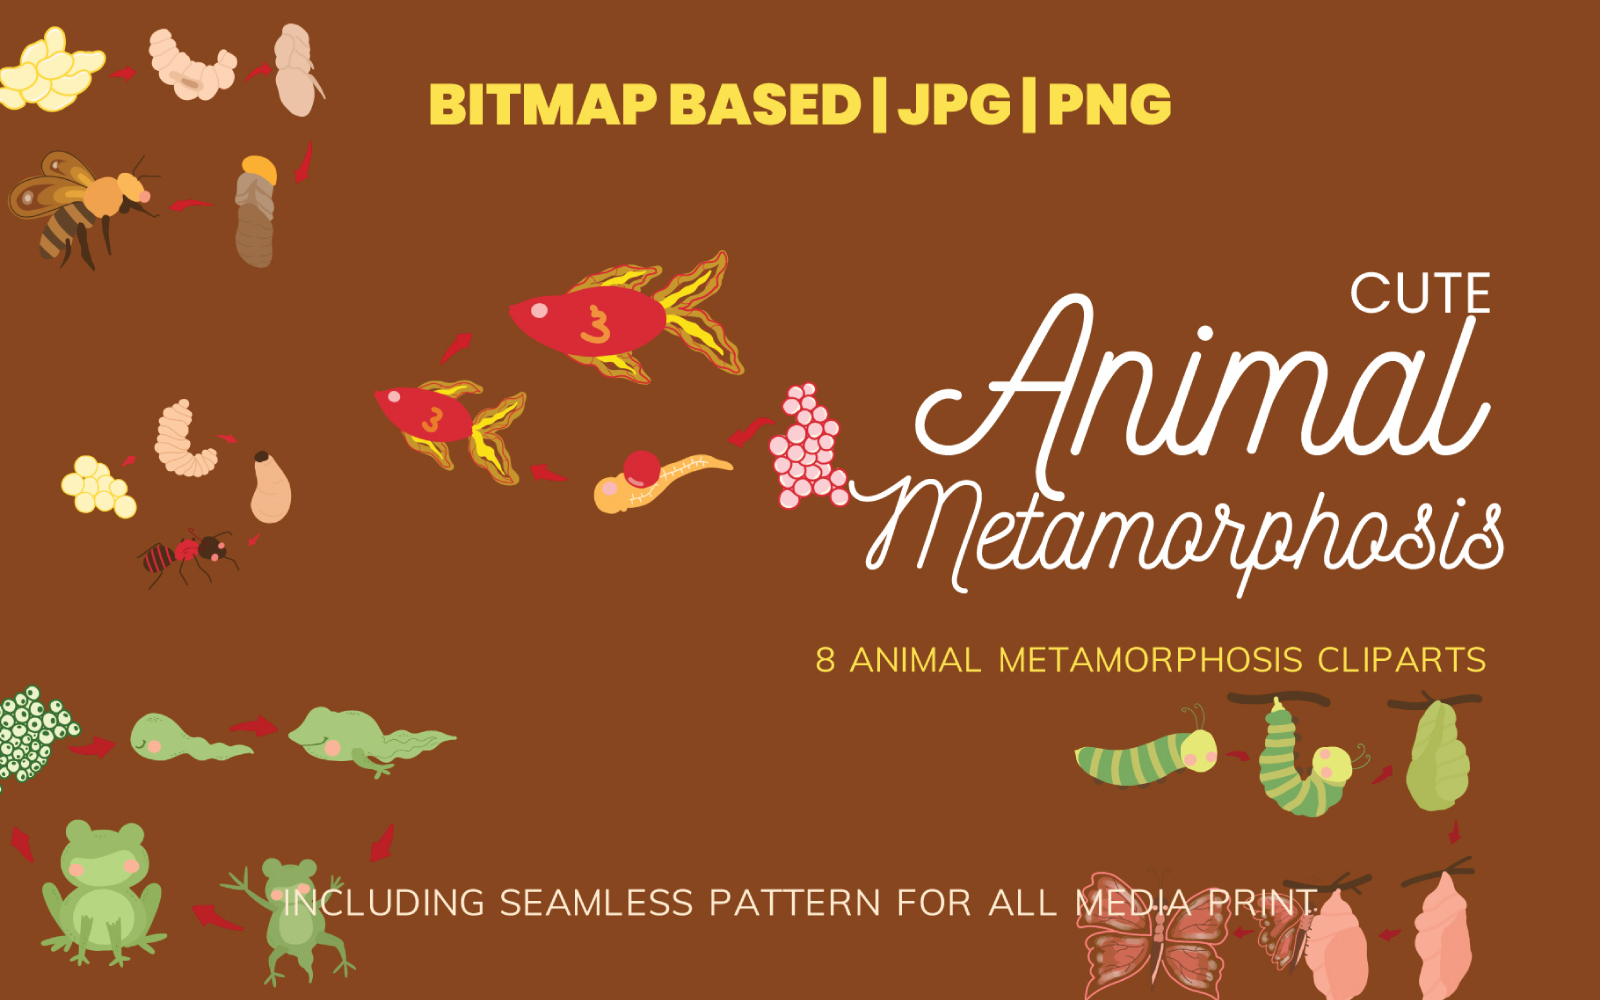 Metamorphosis 8 Clipart Illustration Plus Seamless Pattern